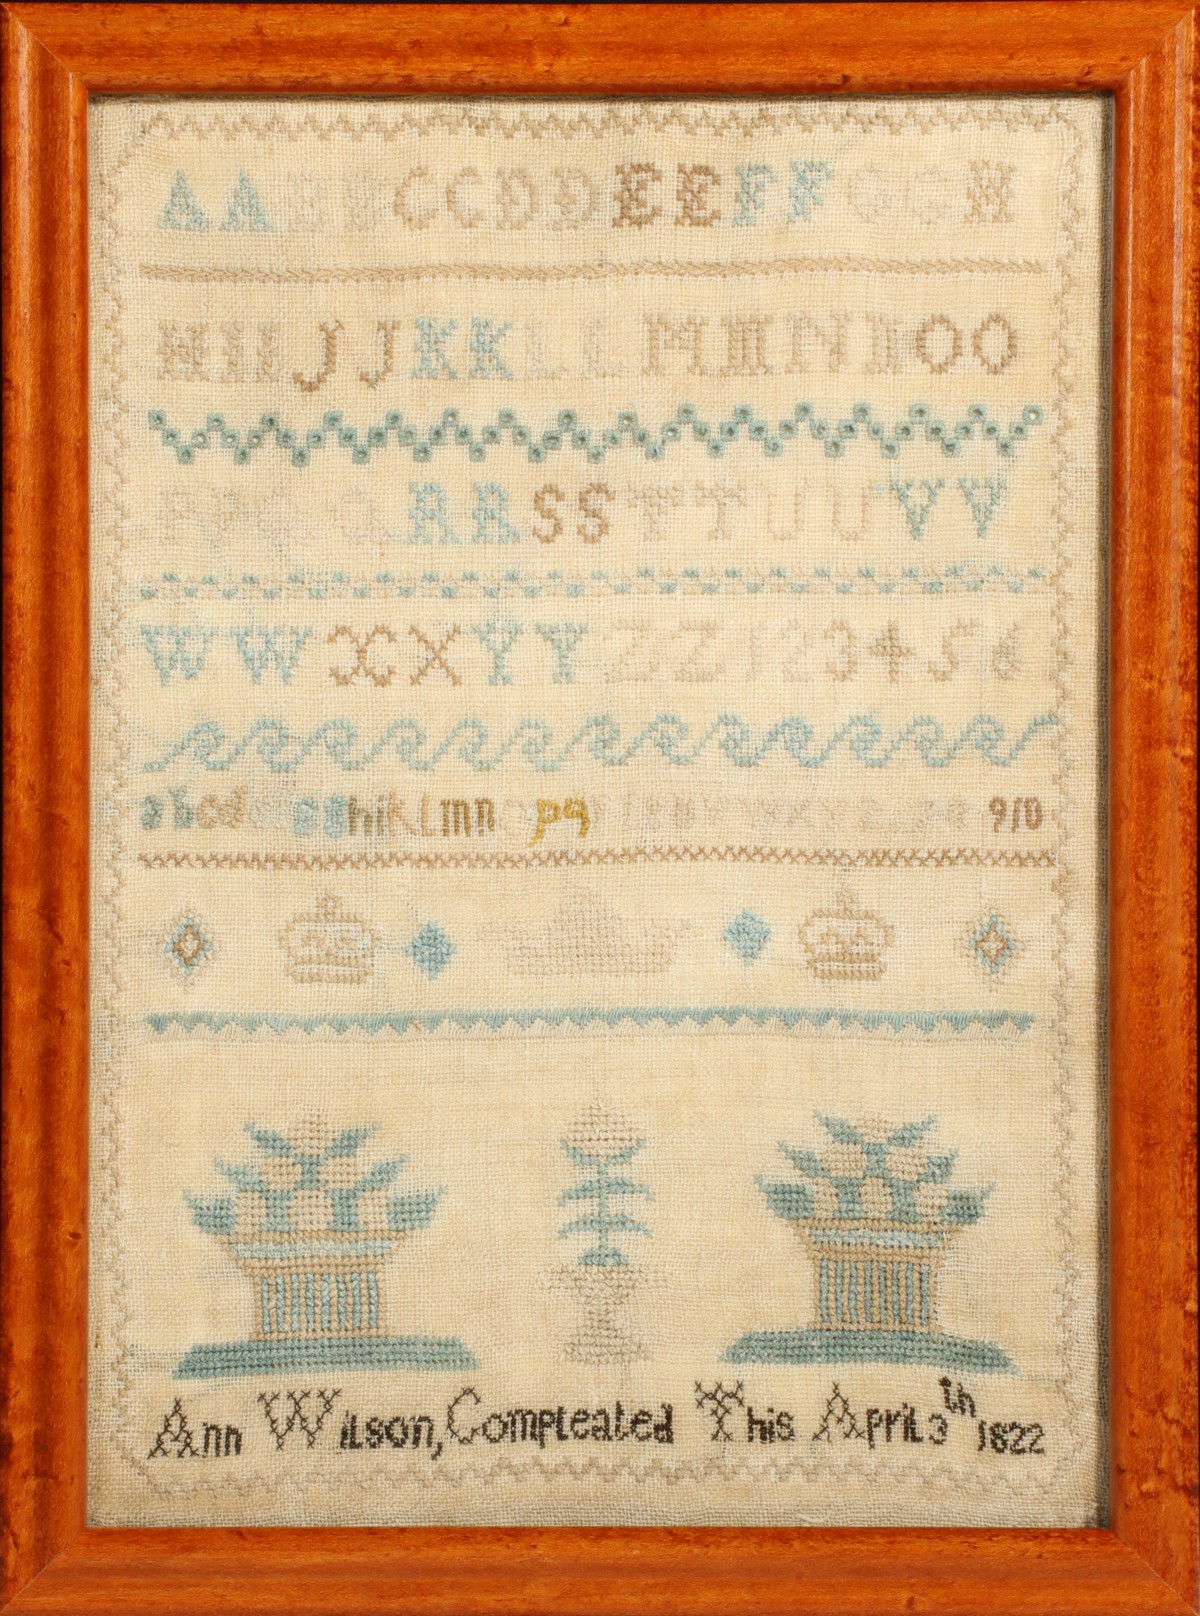 A CROSS STITCH SAMPLER ANN WILSON COMPLETED APRIL 1822